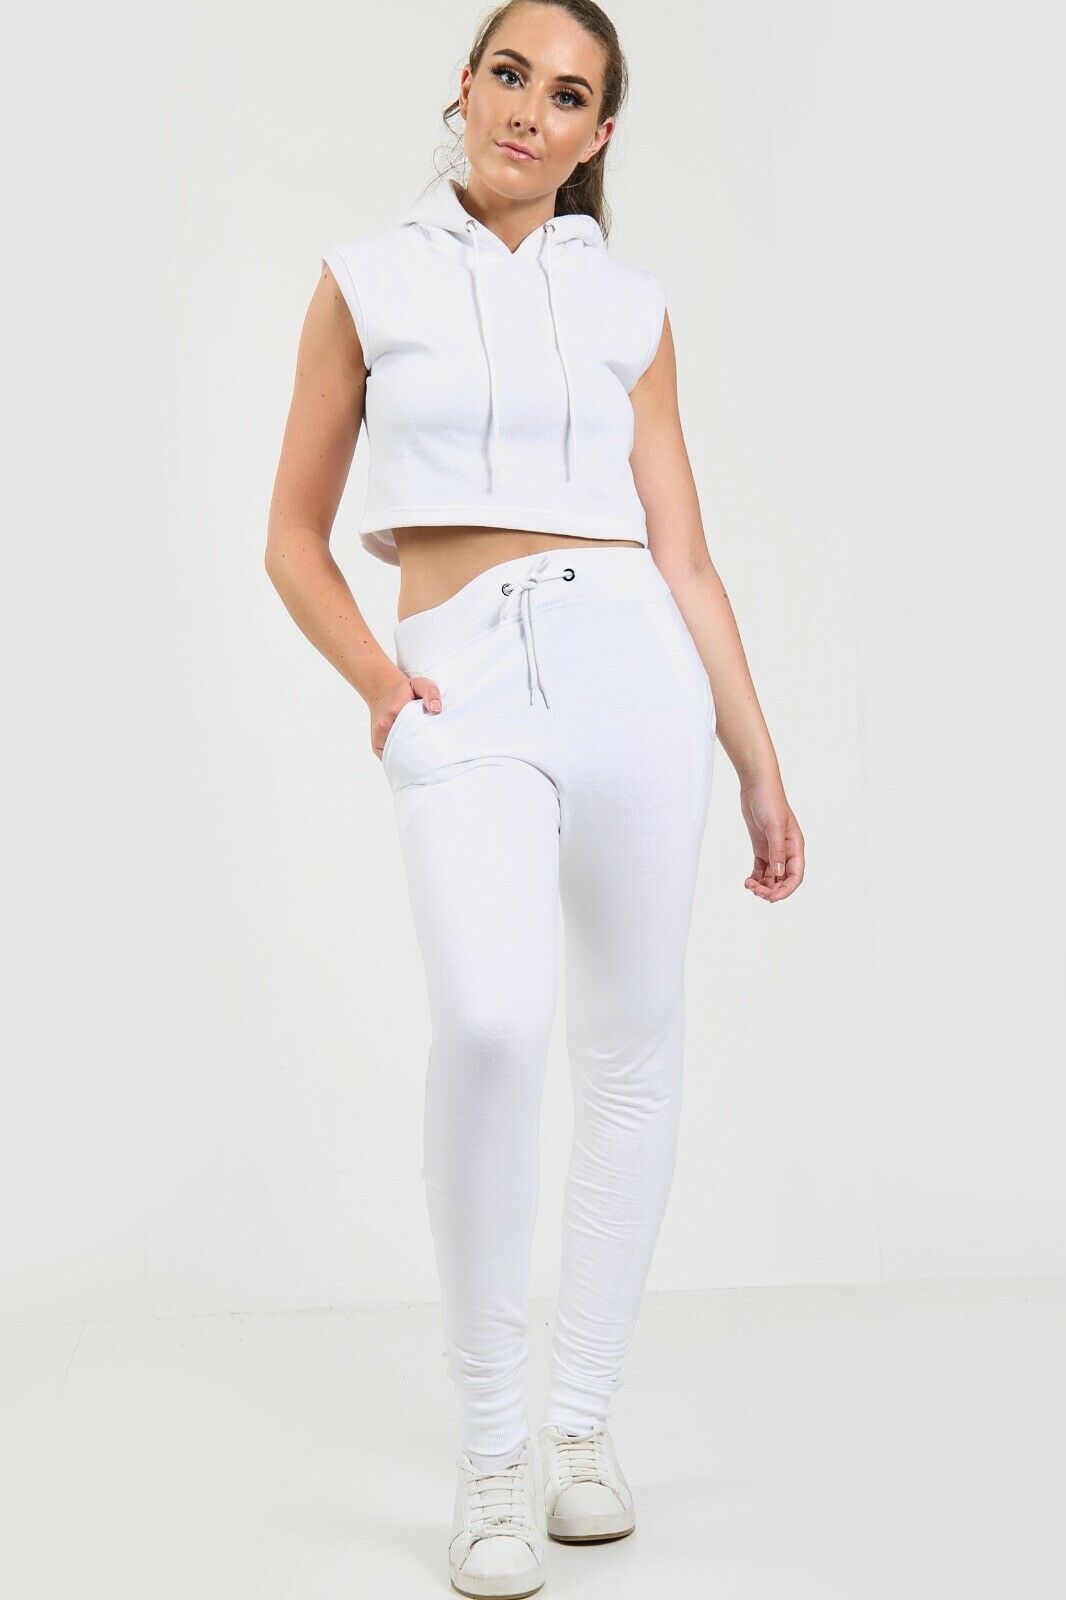 Ladies White Cropped Co-Ordinated Sleeveless Loungewear Set.